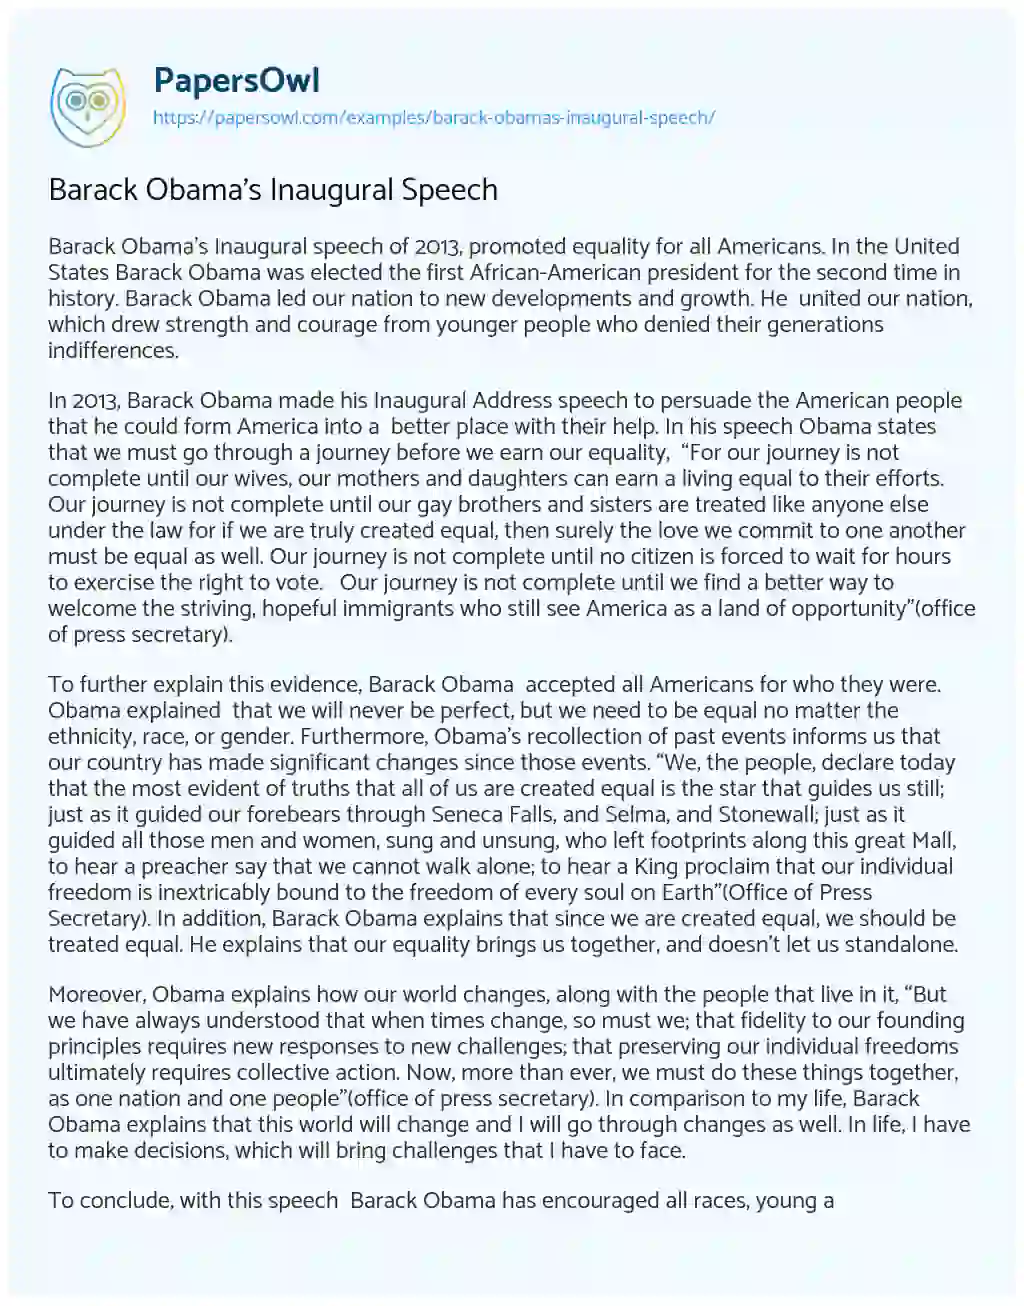 Essay on Barack Obama’s Inaugural Speech